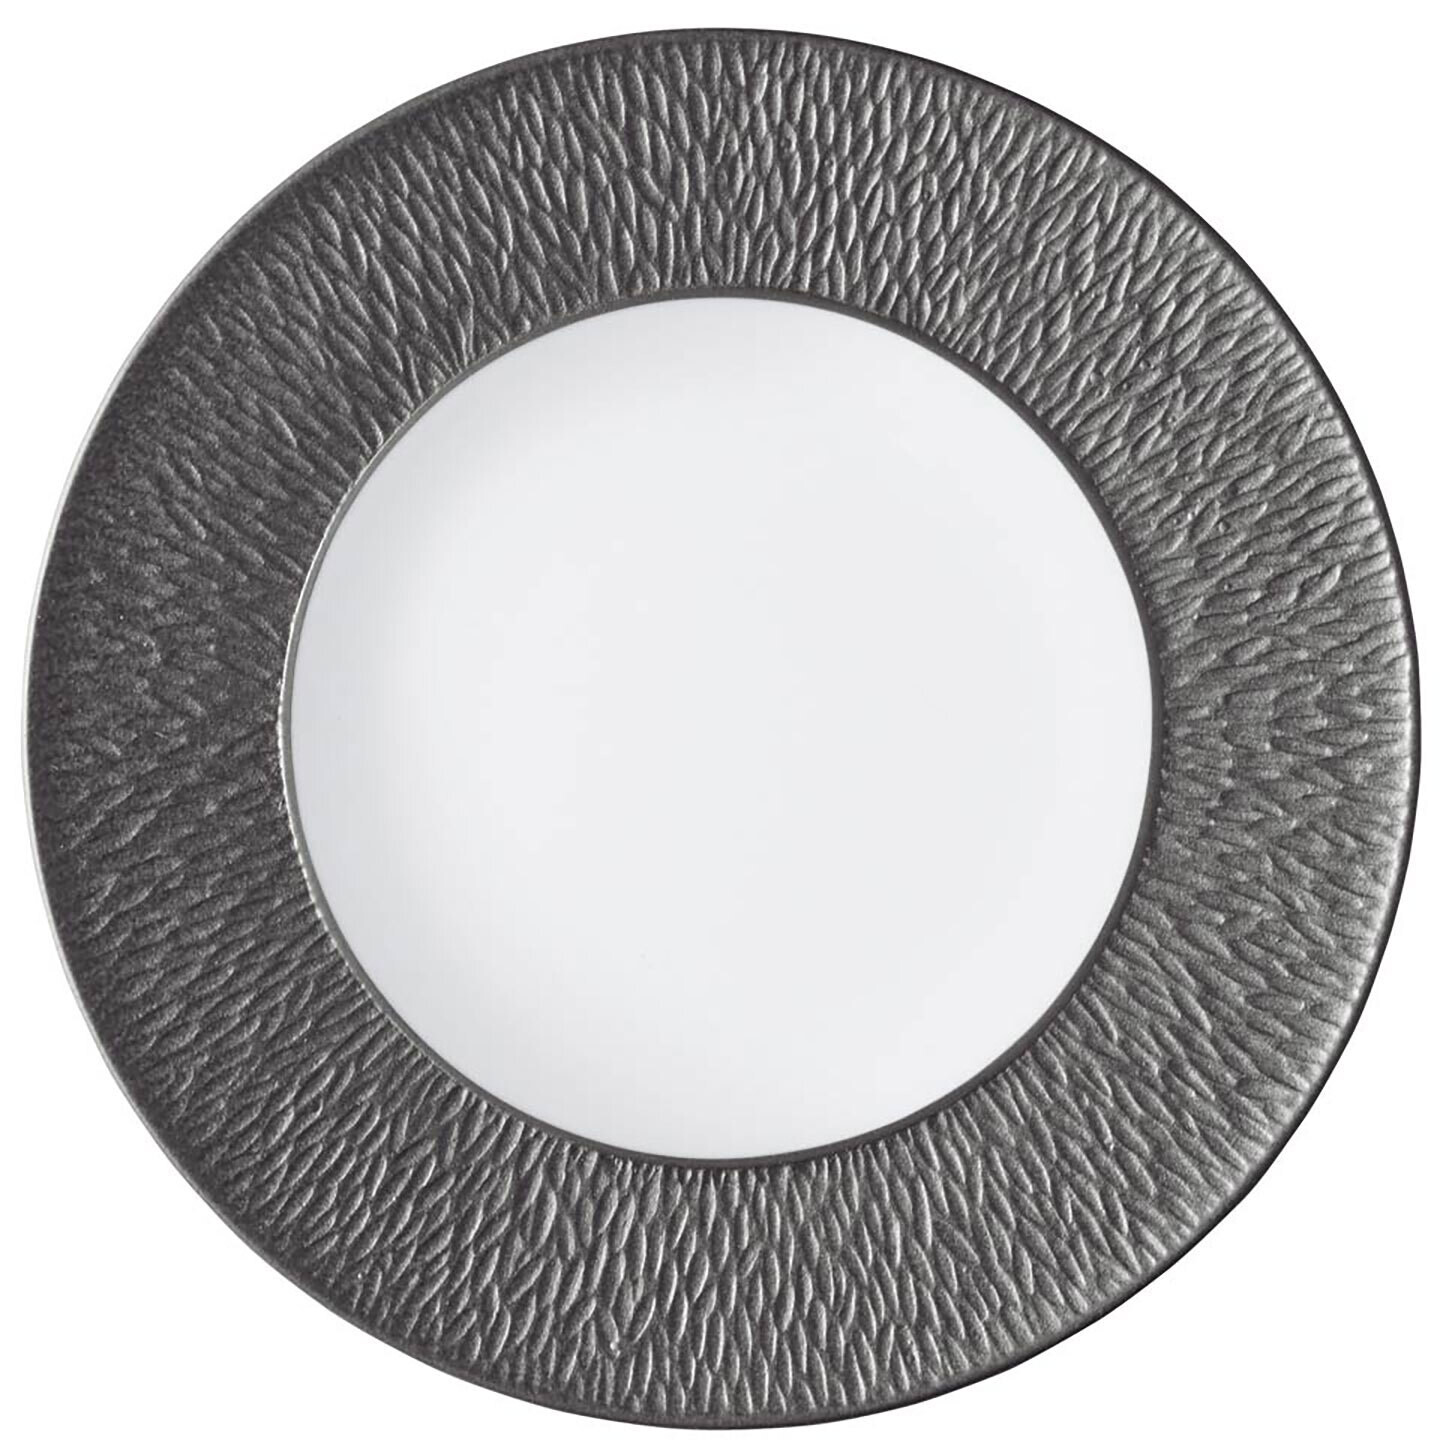 Raynaud Limoges Mineral Irise Dark Grey Oval platter 14.2 x 10.2 in 0339-24-502036